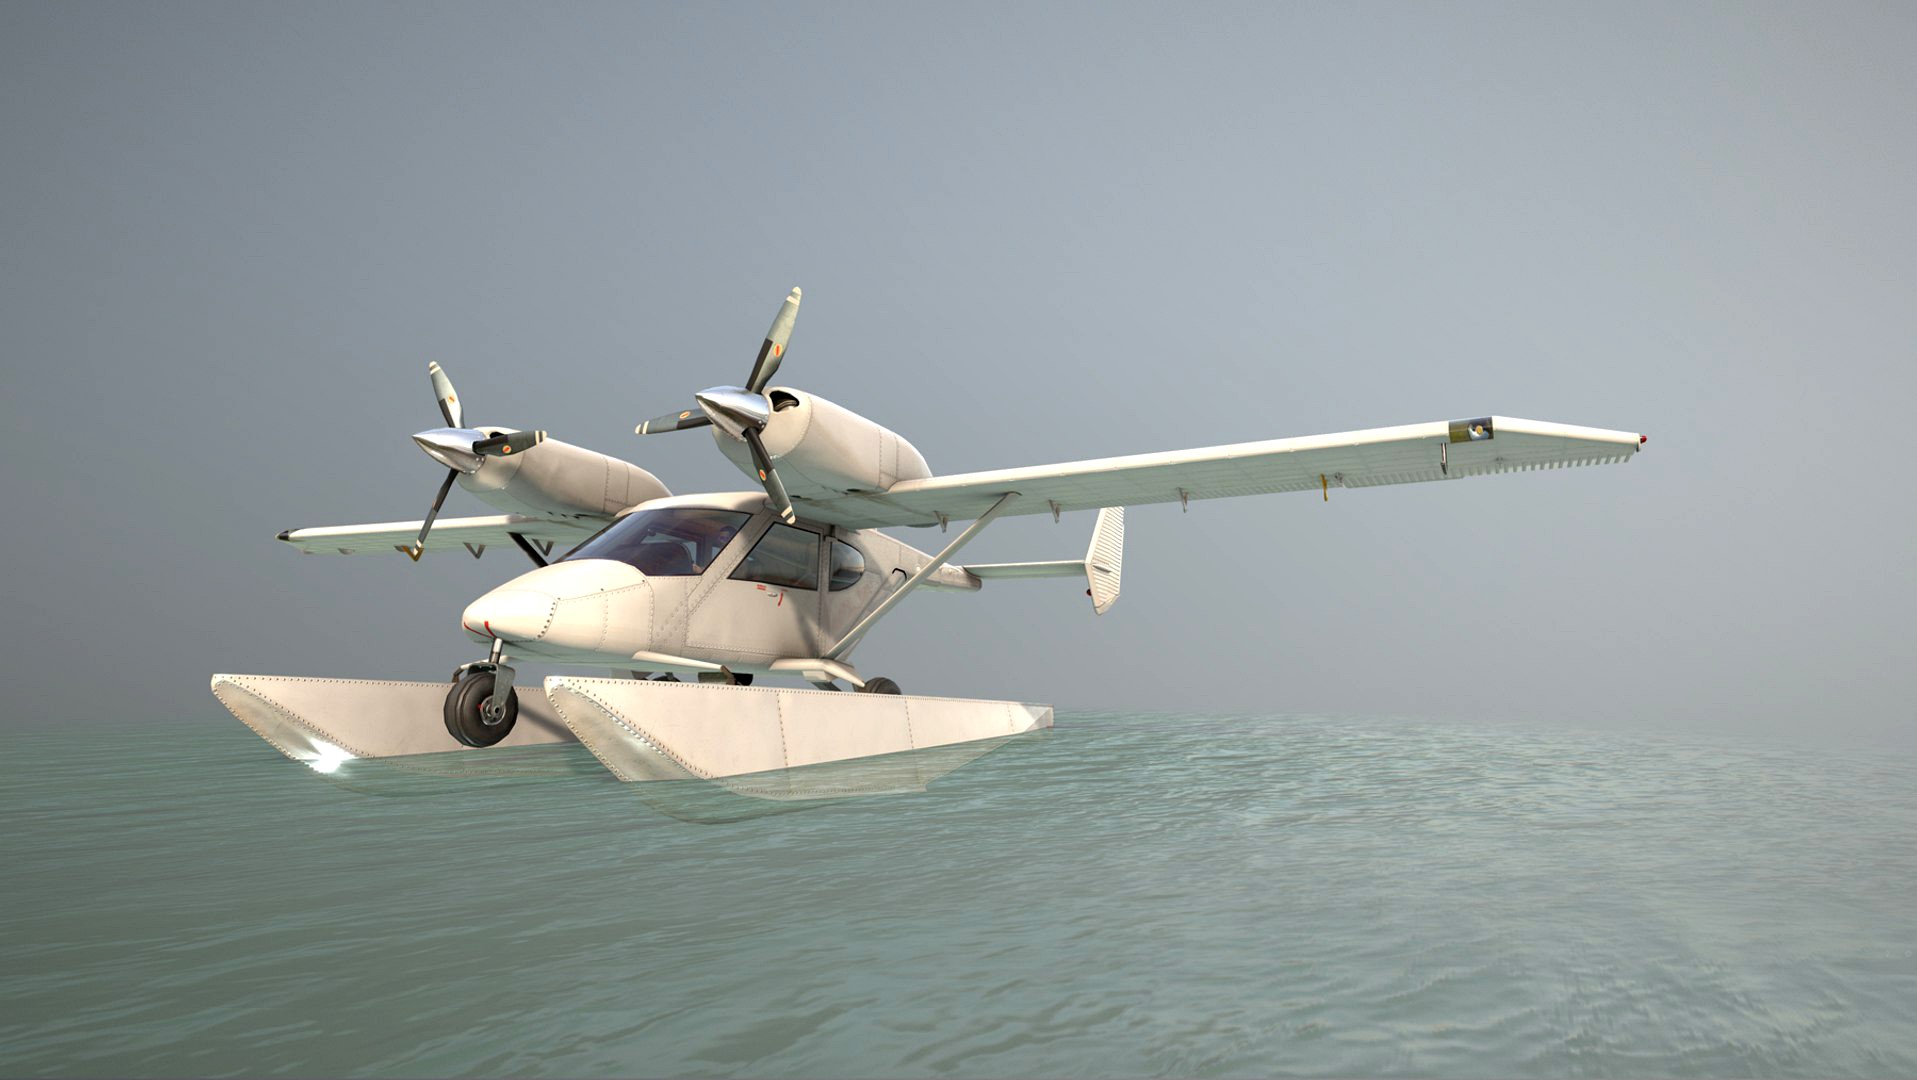 Accord-201 Floatsplane Default Livery